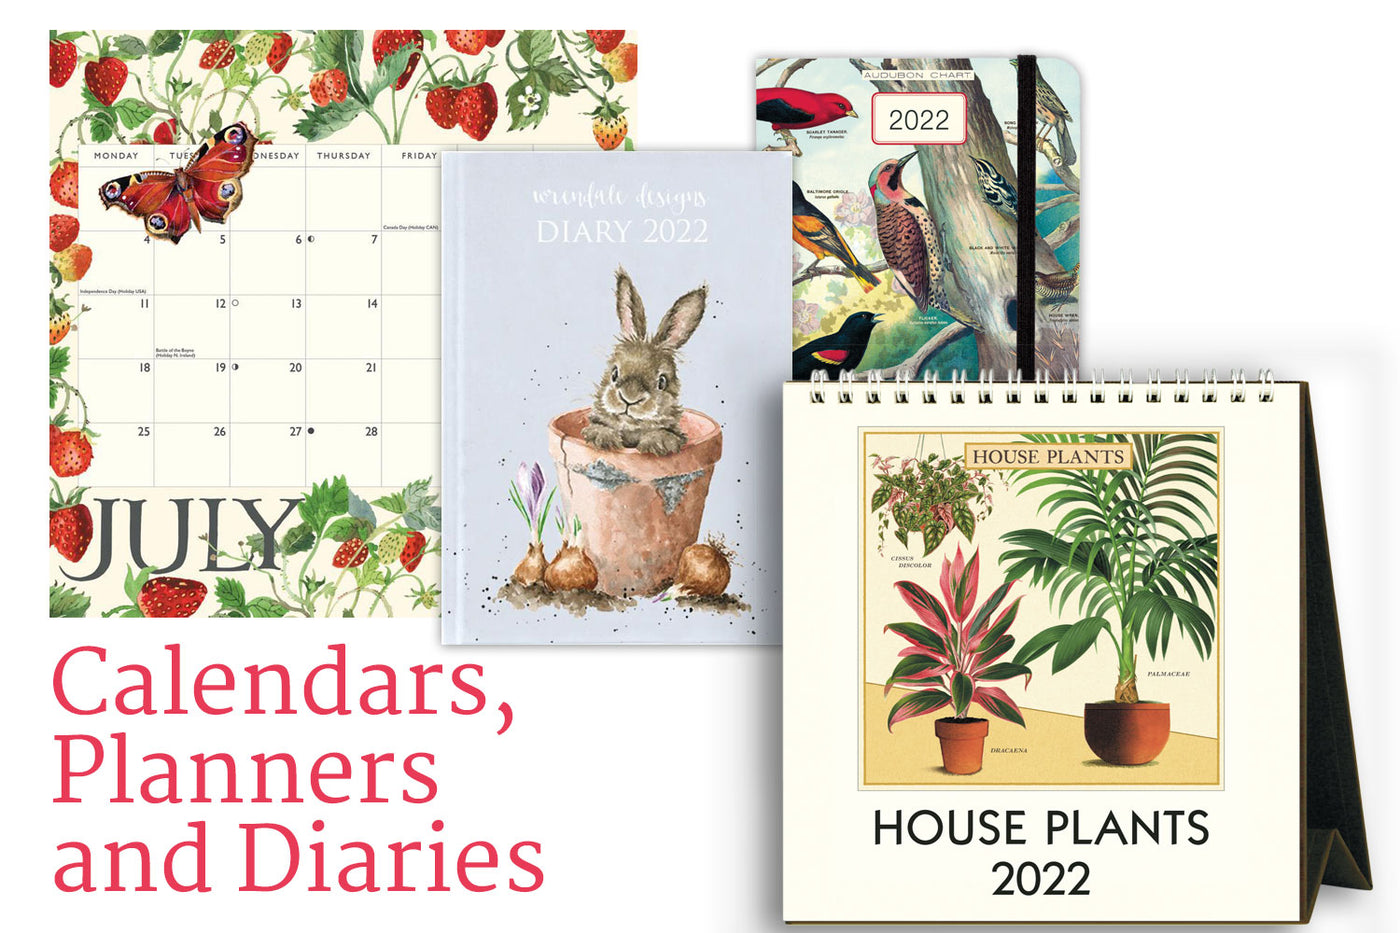 Diaries and Calendars